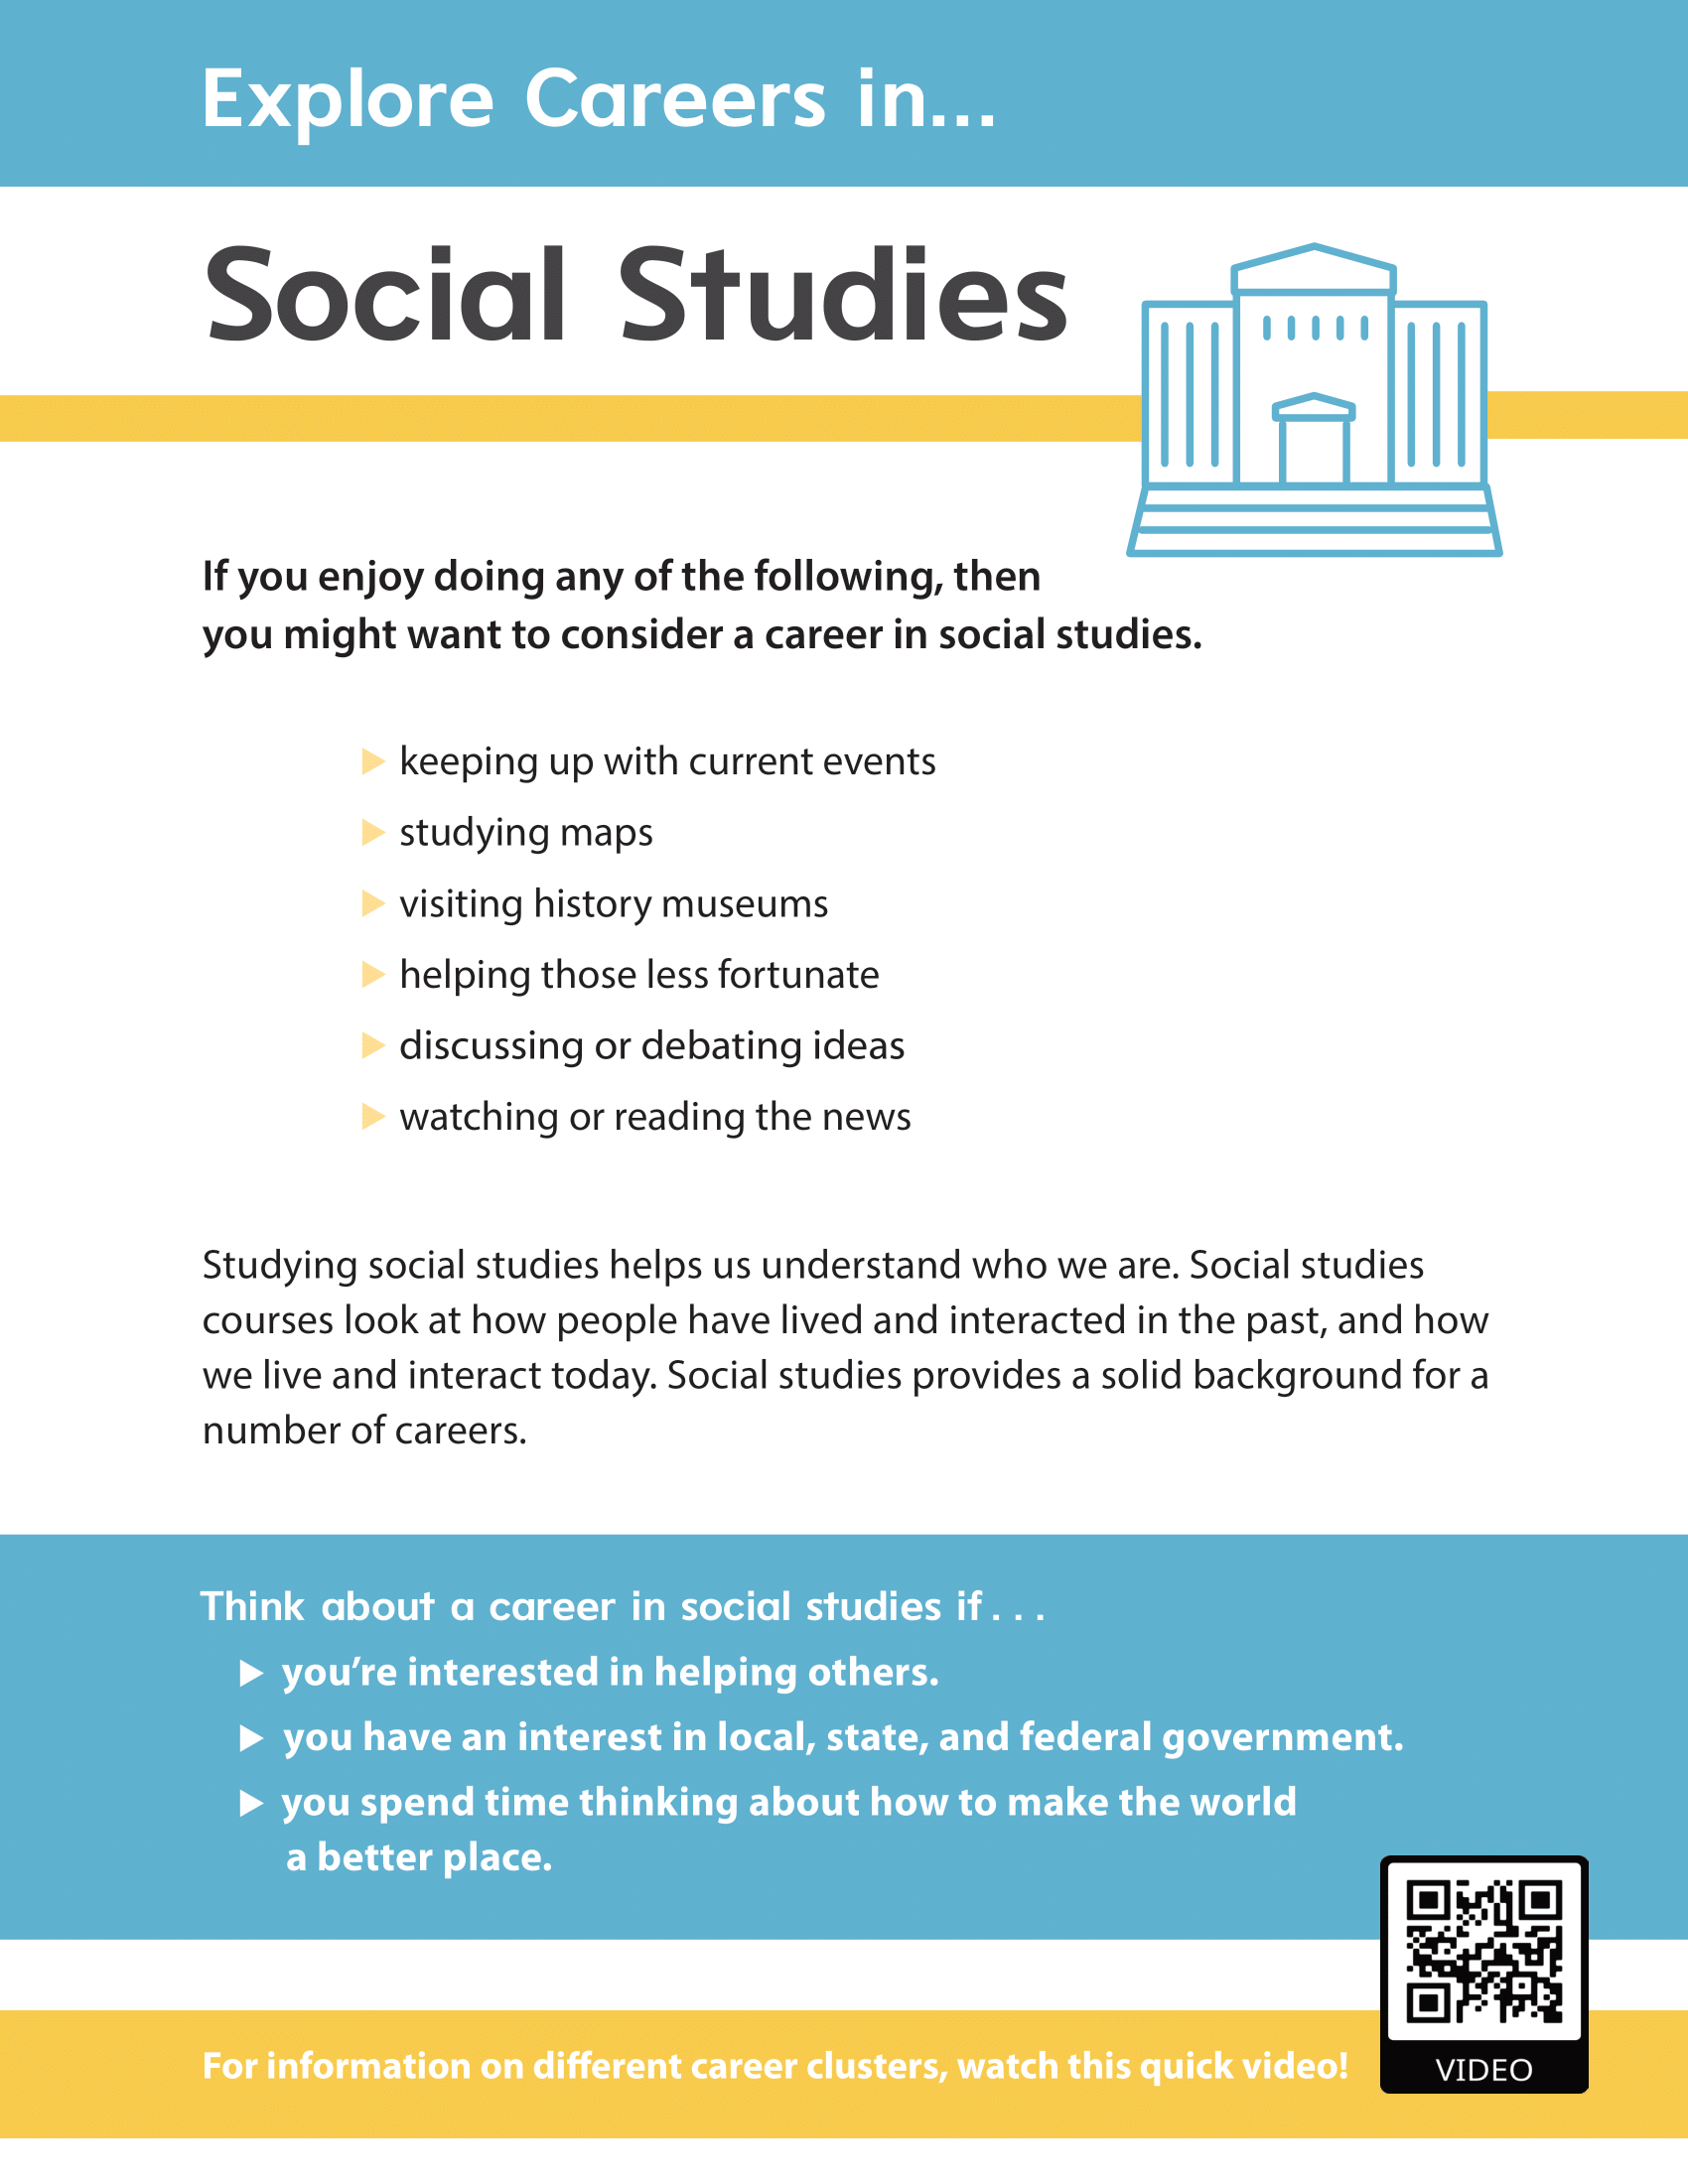 Explore Careers in Social Studies